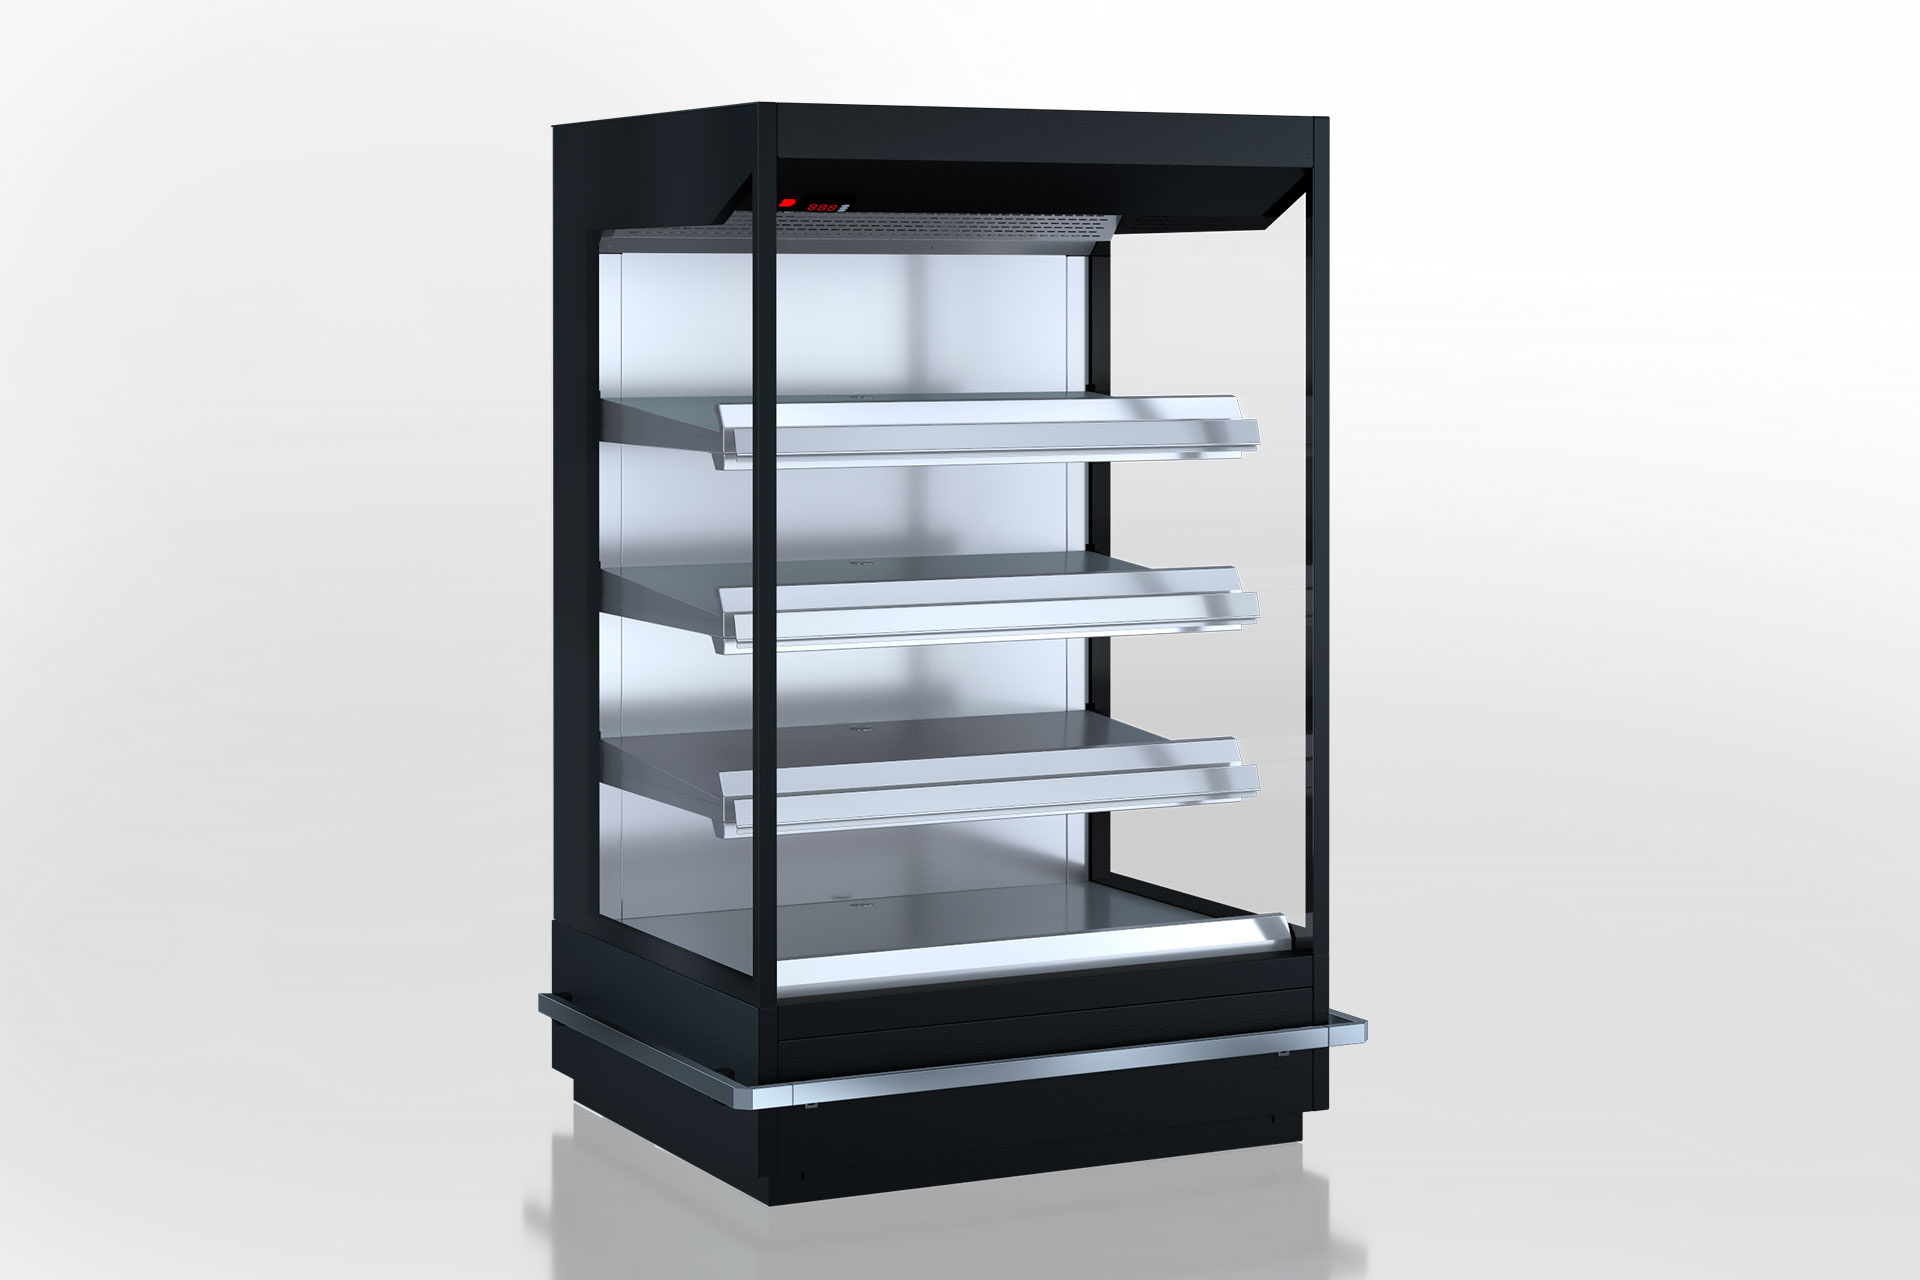 Thermal multideck cabinets Indiana eco NV 080 heat O 160